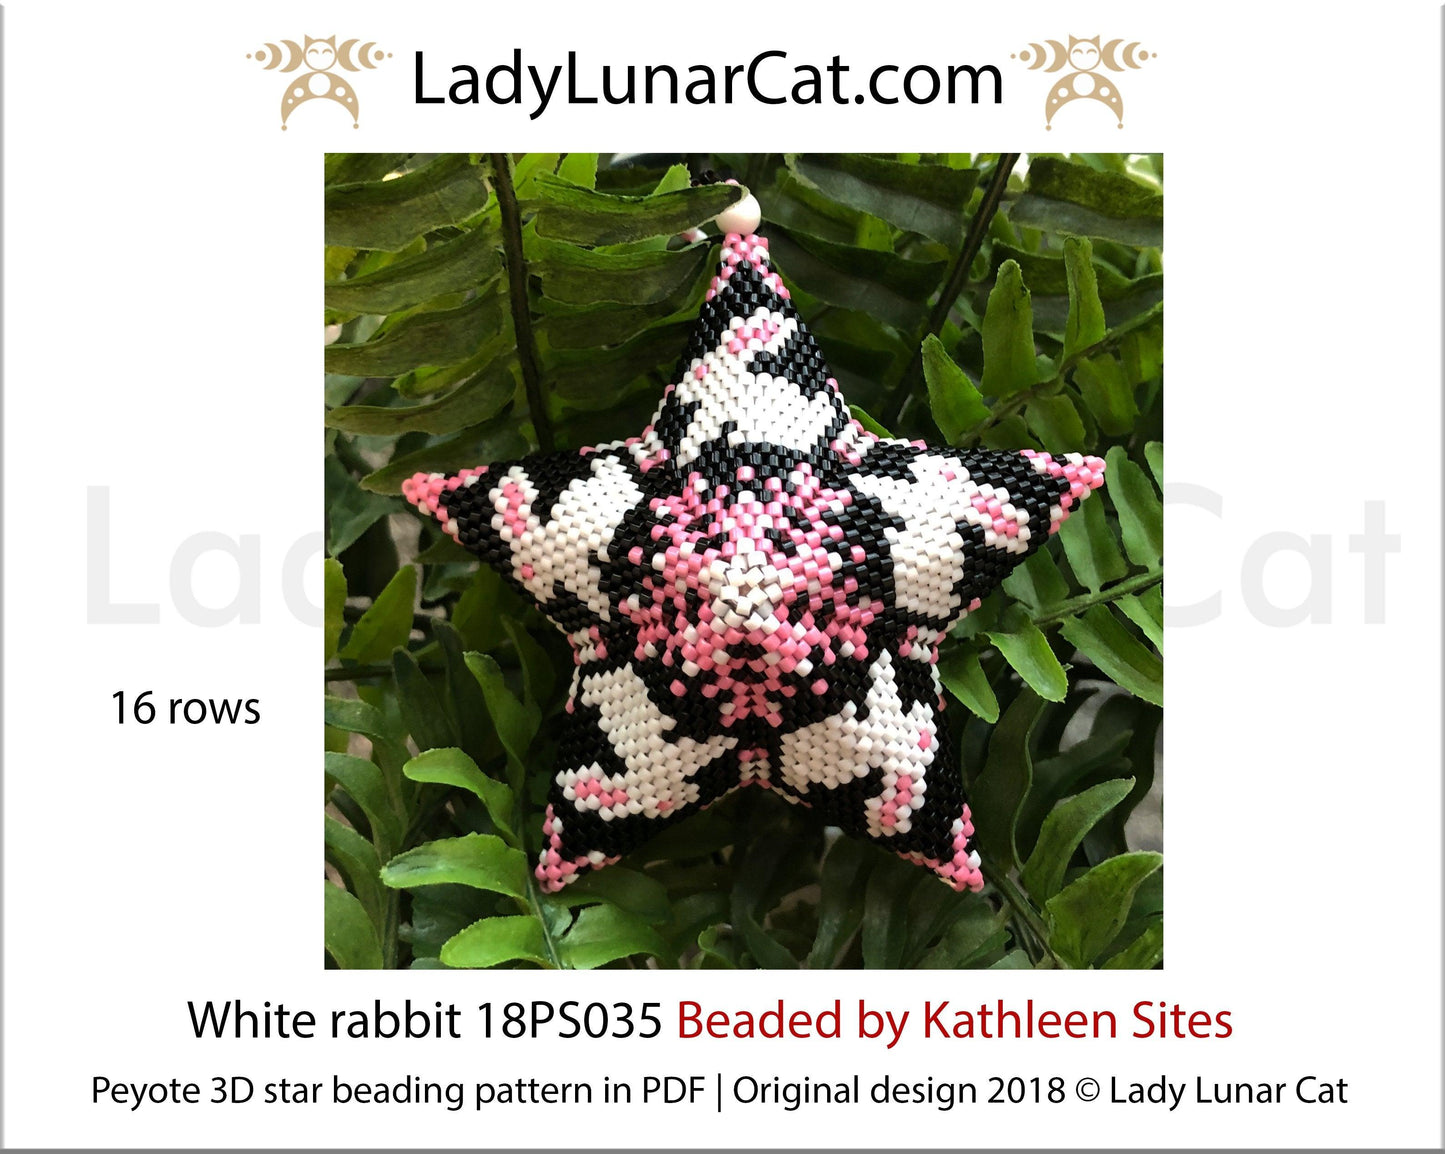 3d peyote star patterns for beading White rabbit 18PS035 LadyLunarCat